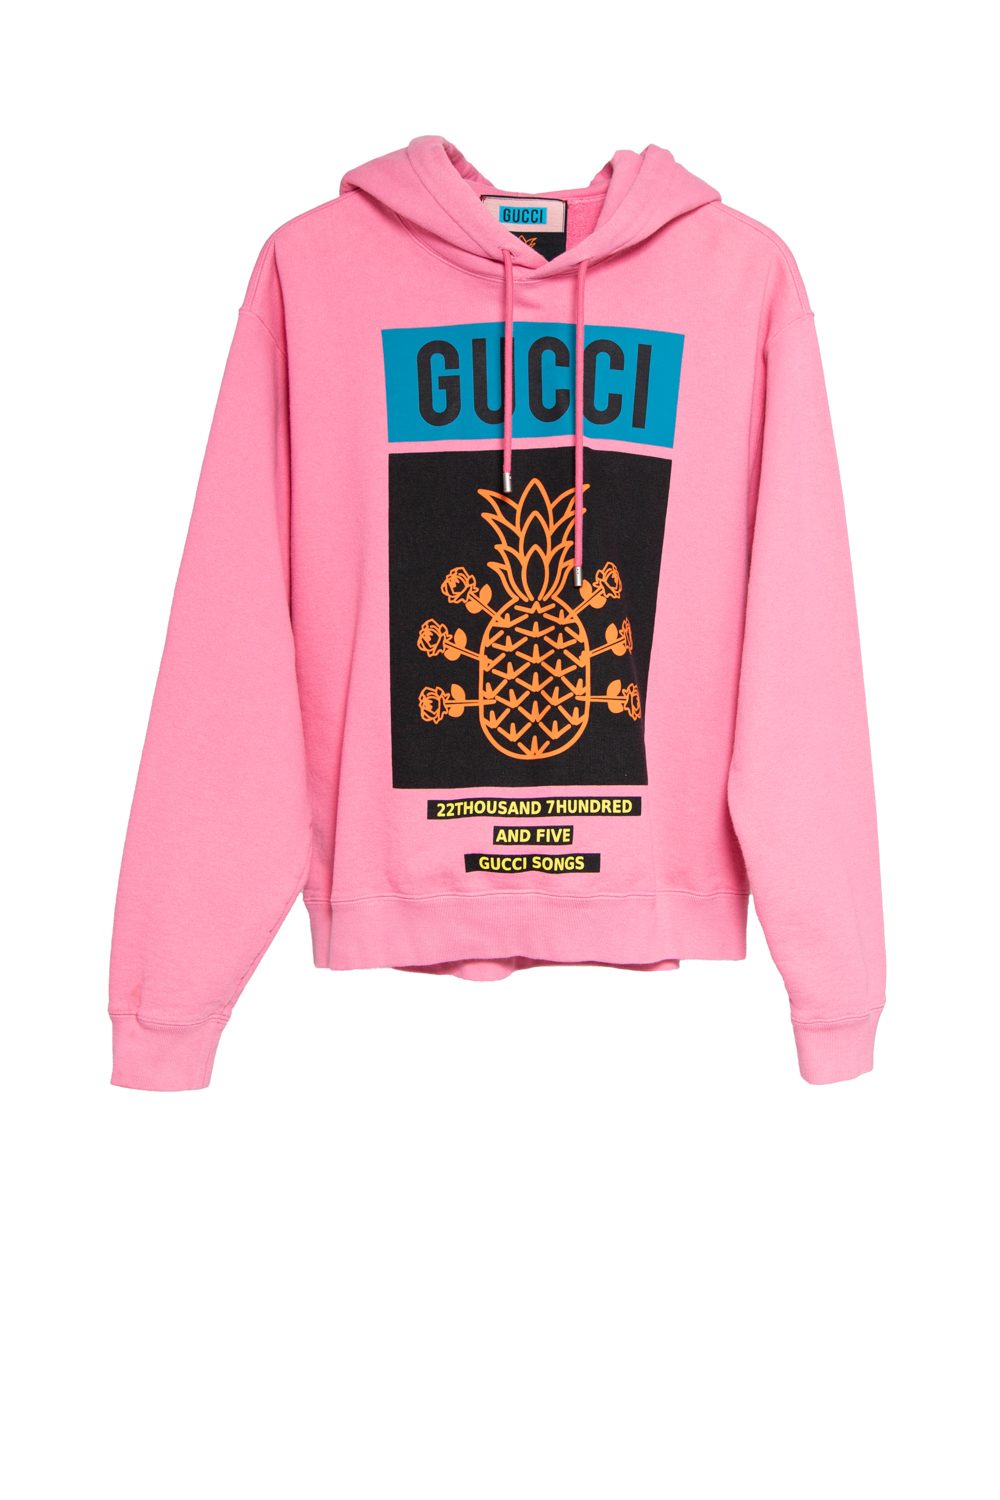 Gucci x Musixmatch "22,705" Kapuzenpullover in Pink